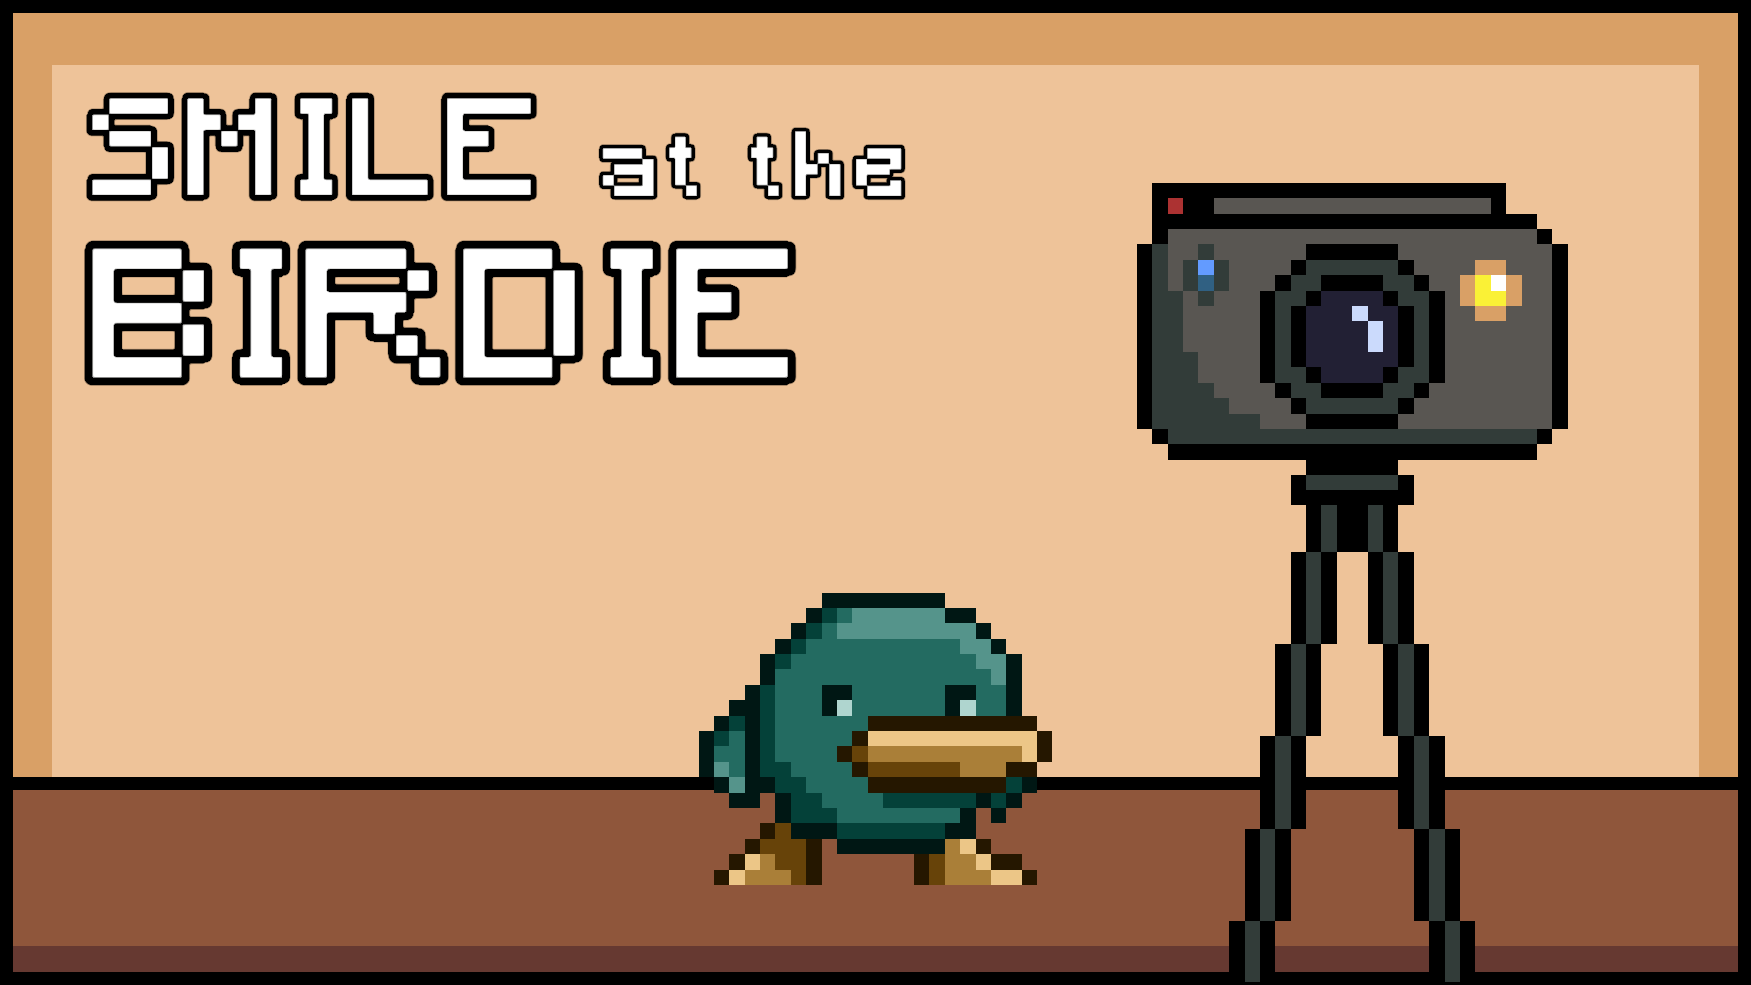 Smile at the Birdie!